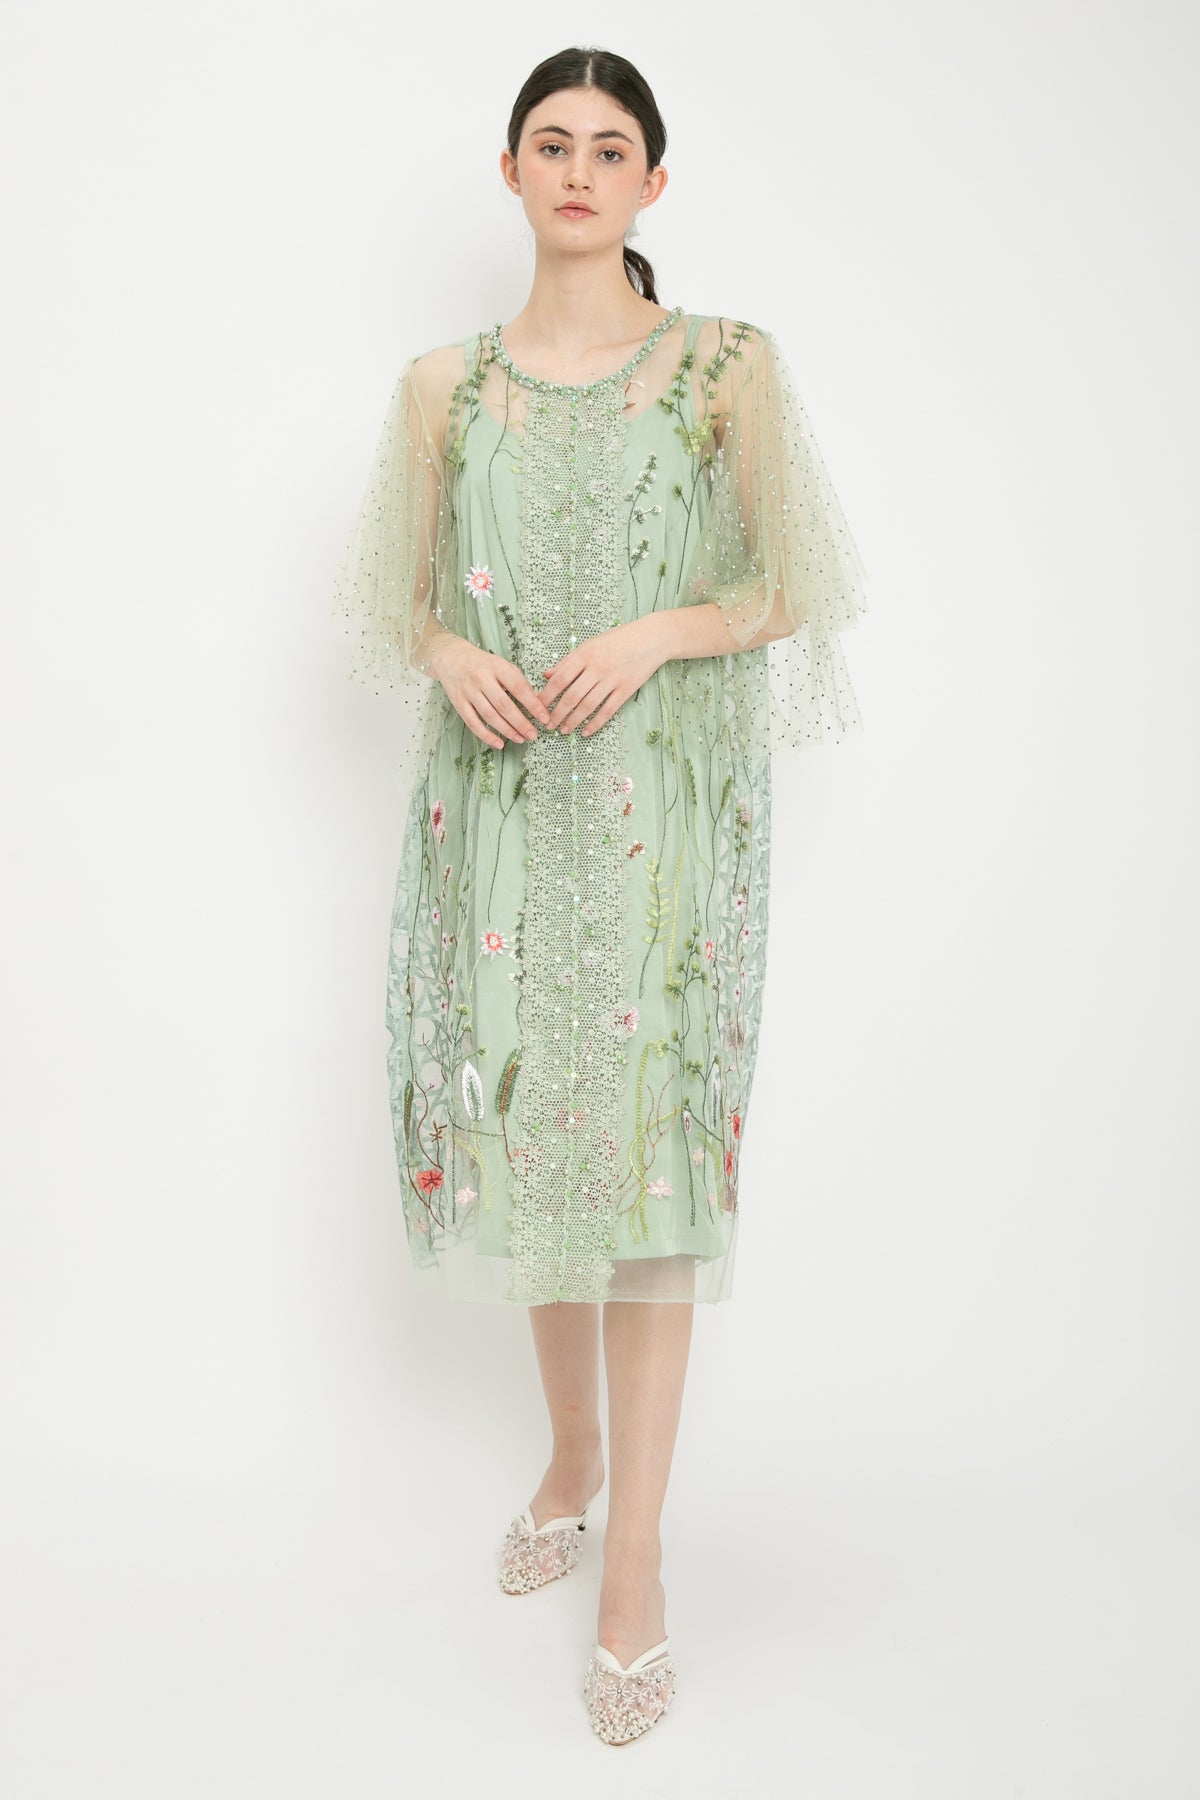 Gardenia Dress in Sage Green